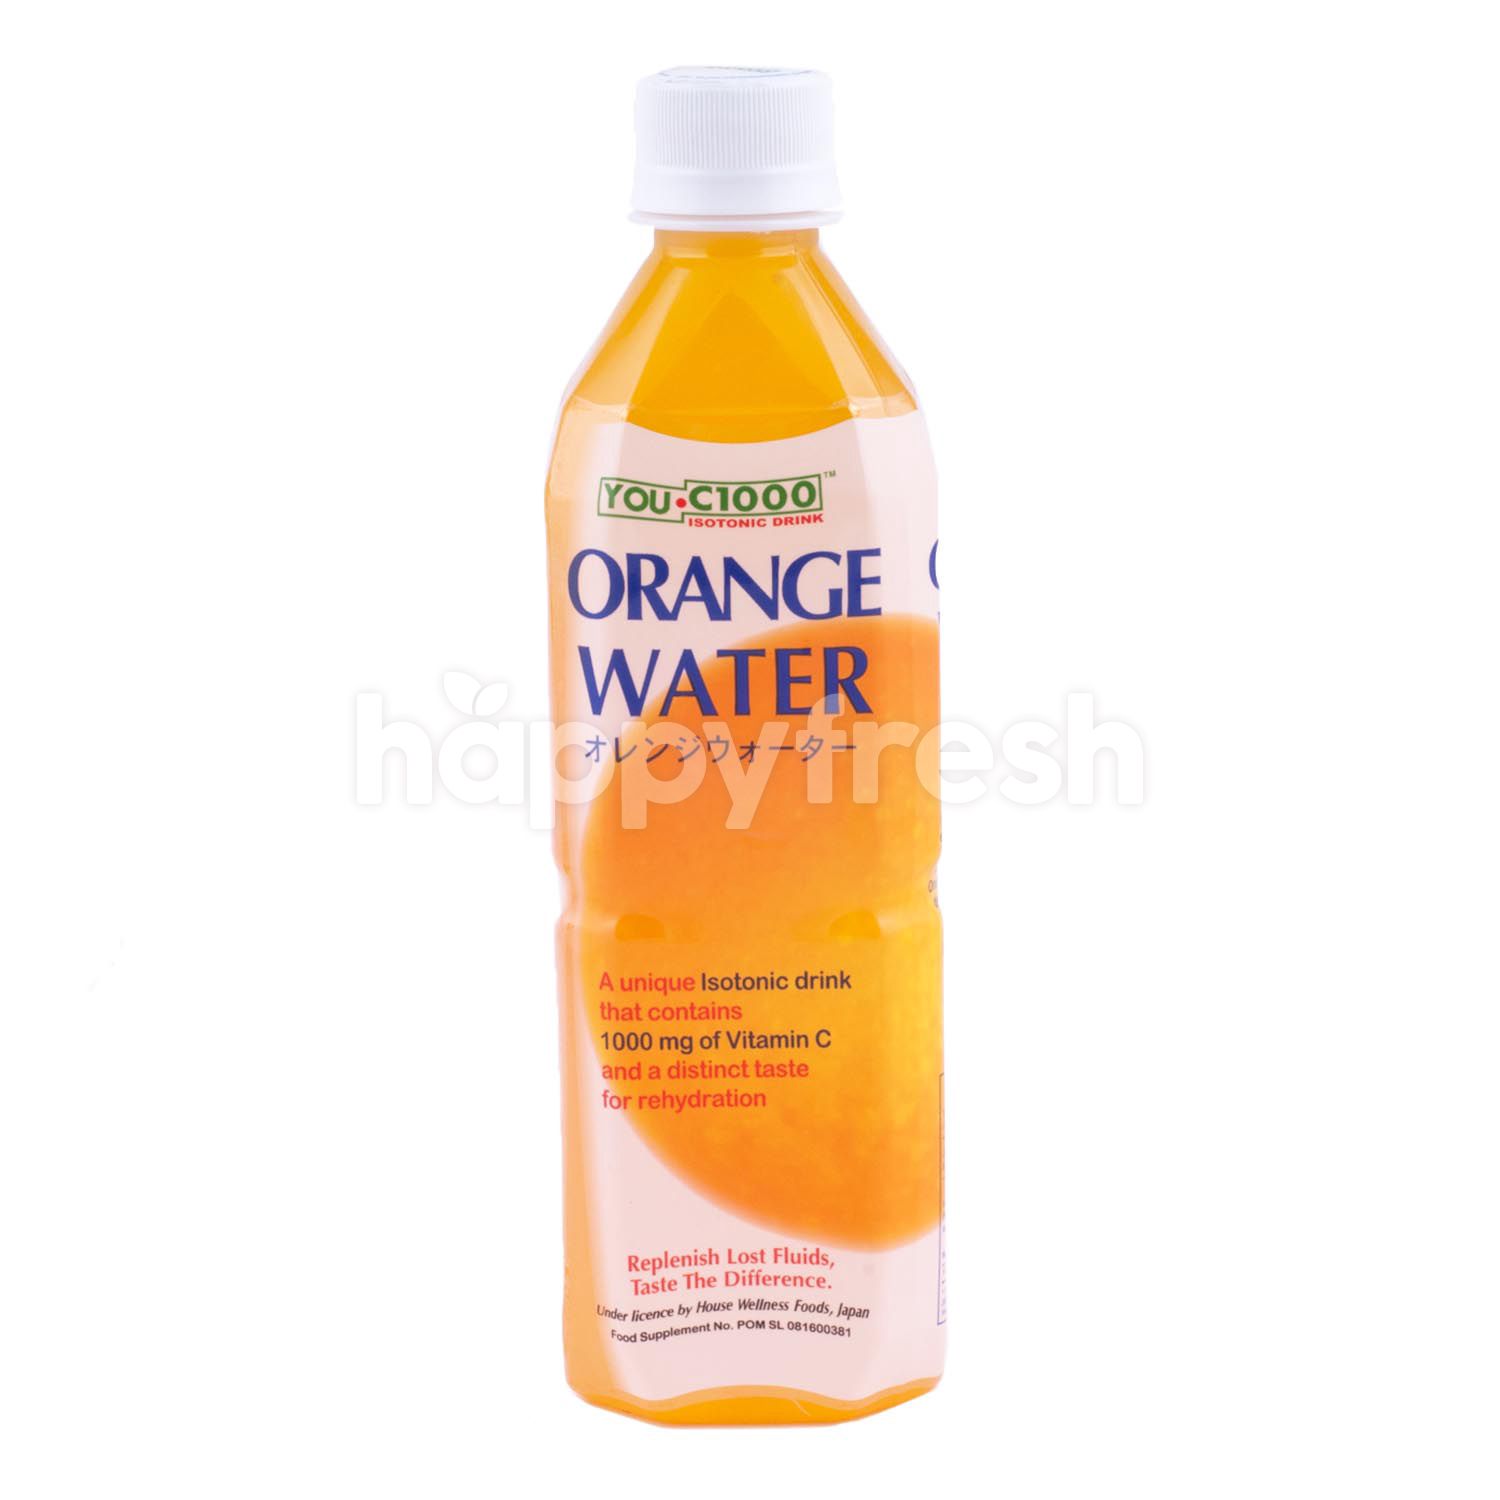 Jual You C1000 Orange Water Isotonic Drink Di Ranch Market Happyfresh